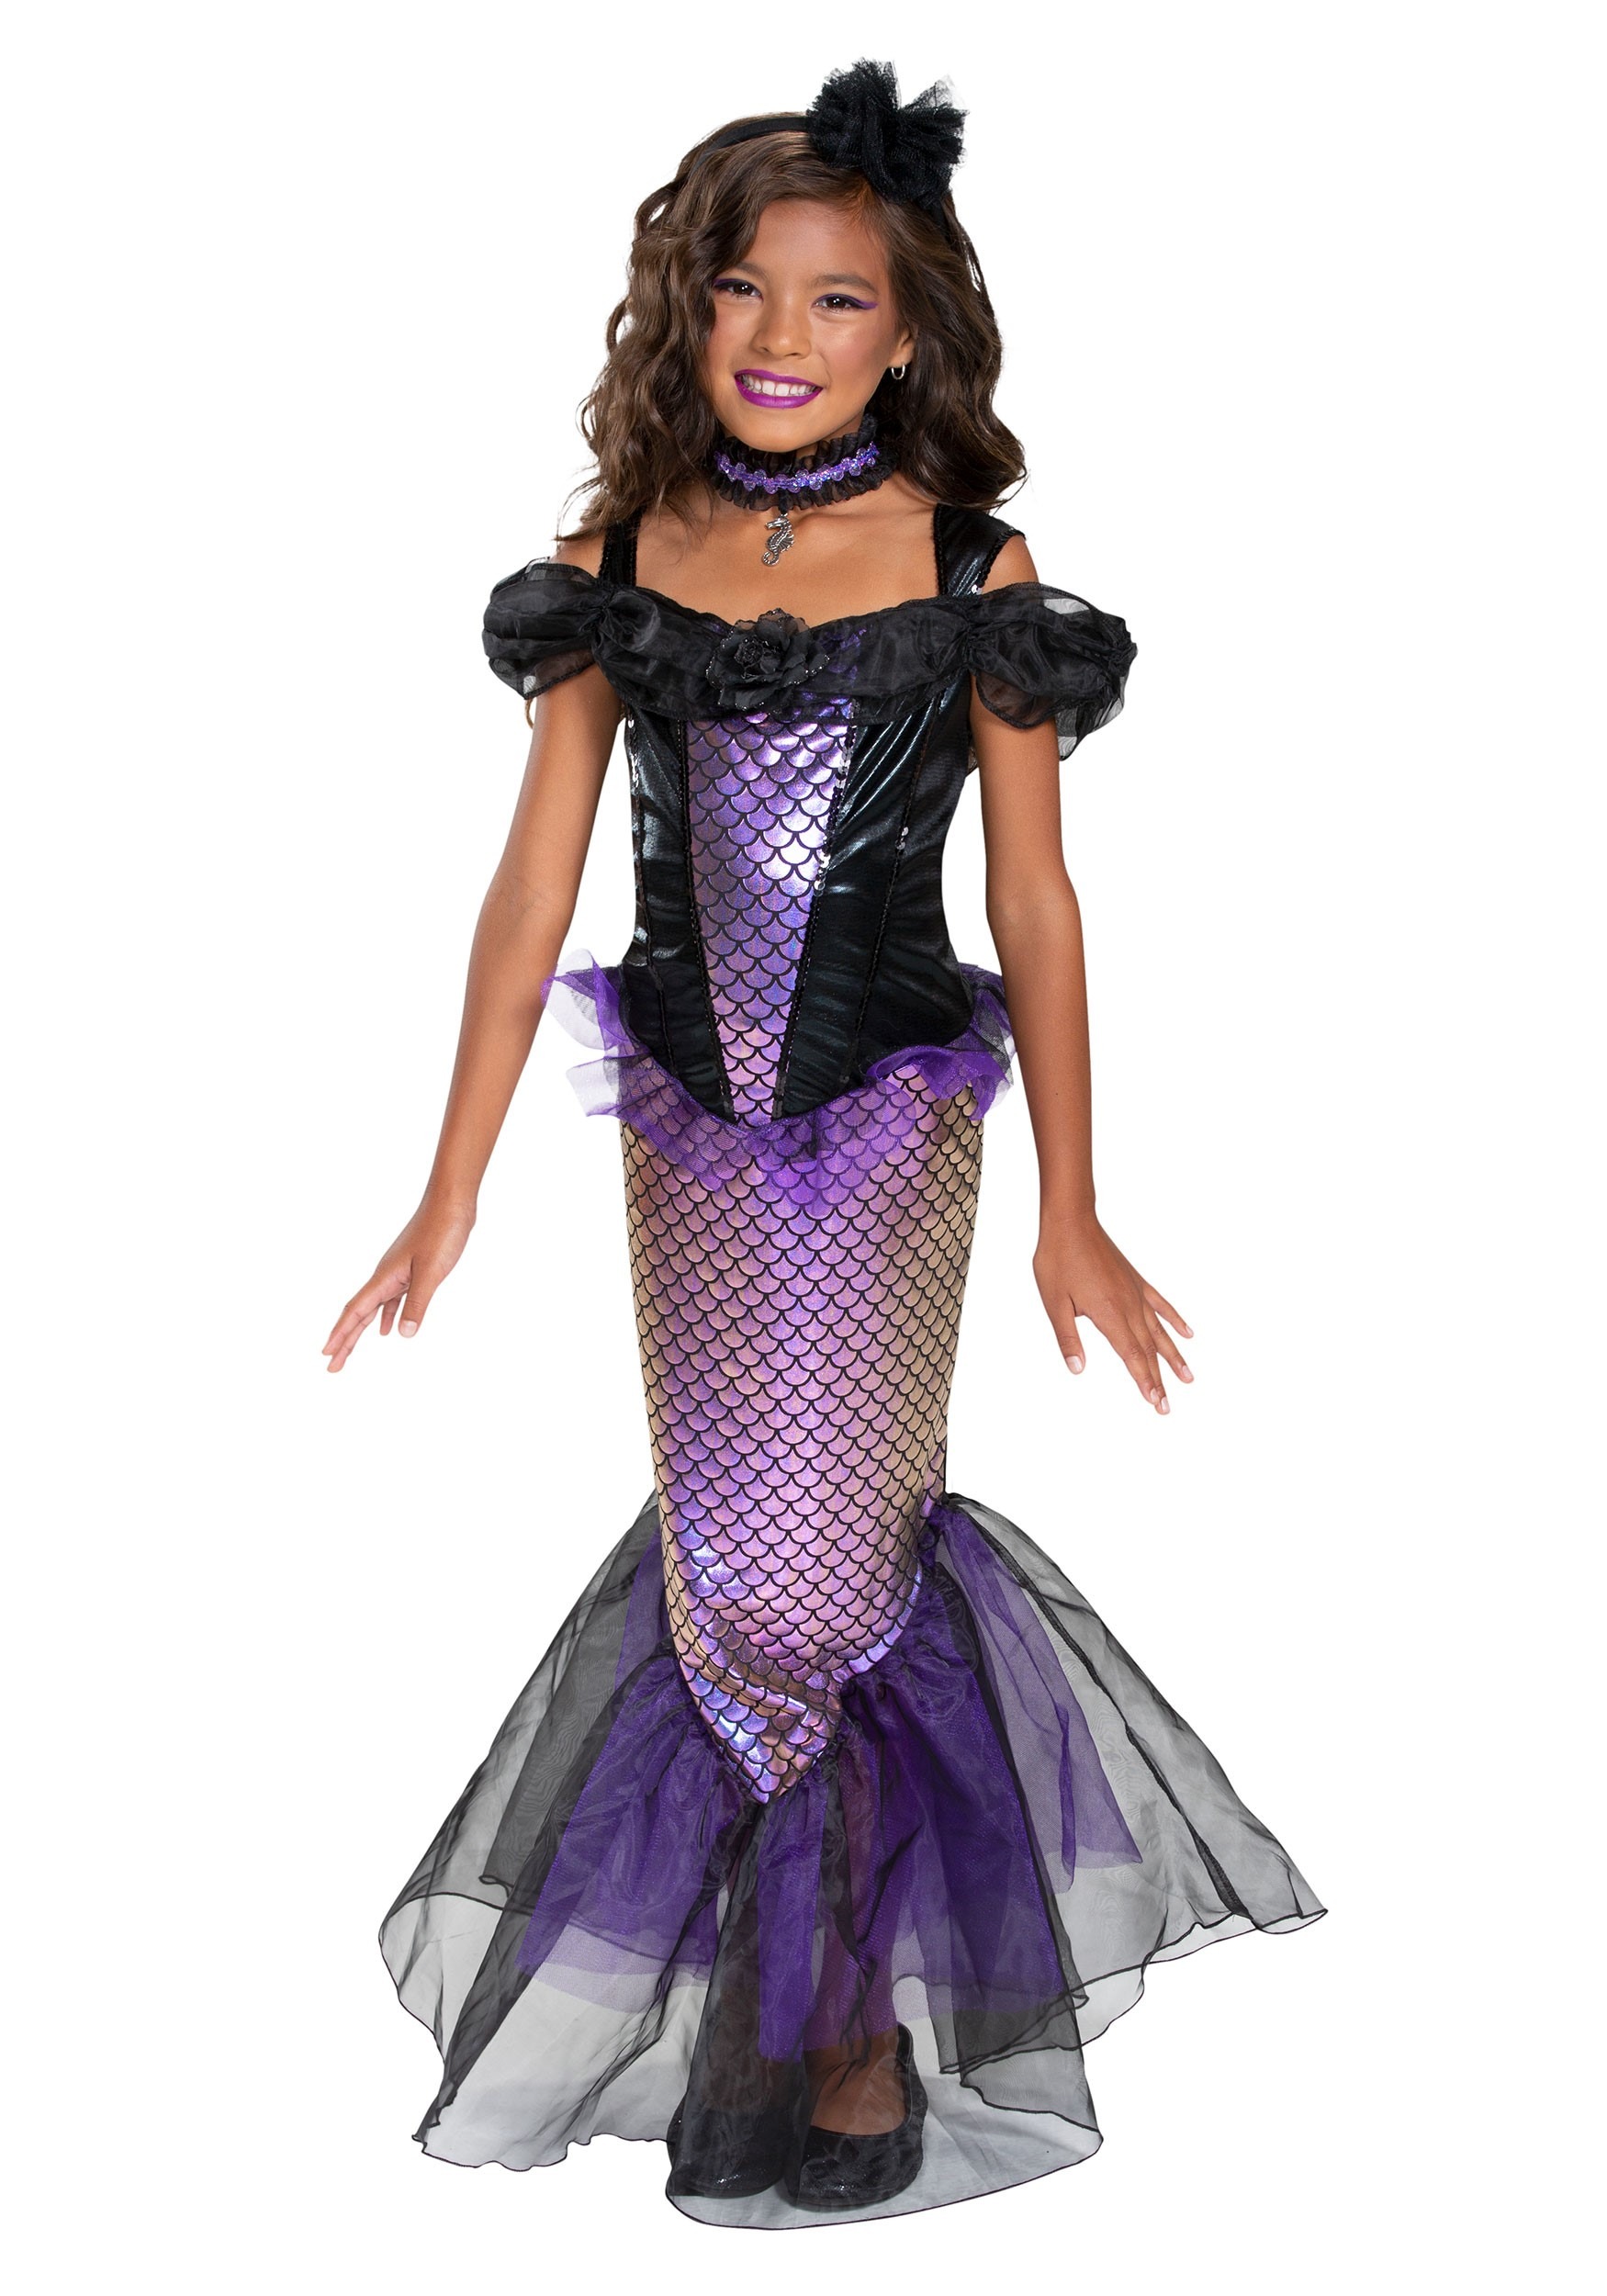 Photos - Fancy Dress Siren LF Centennial Pte. Darkest  Girl's Costume Black/Purple LI40788 